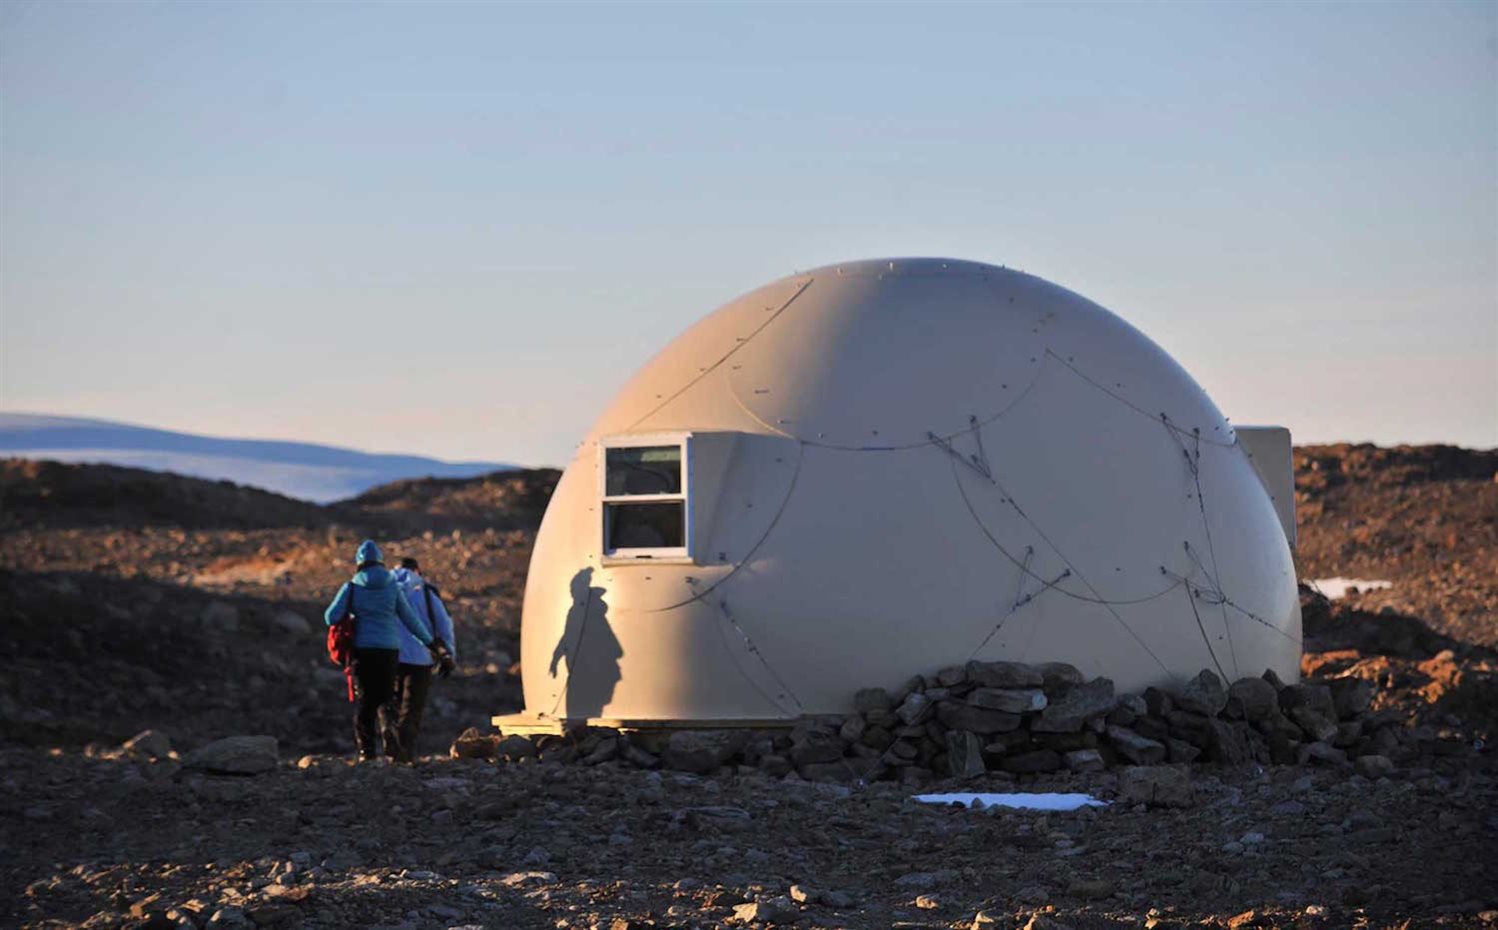 Fibre glass pods of White Desert’s Camp. Campamento White Desert